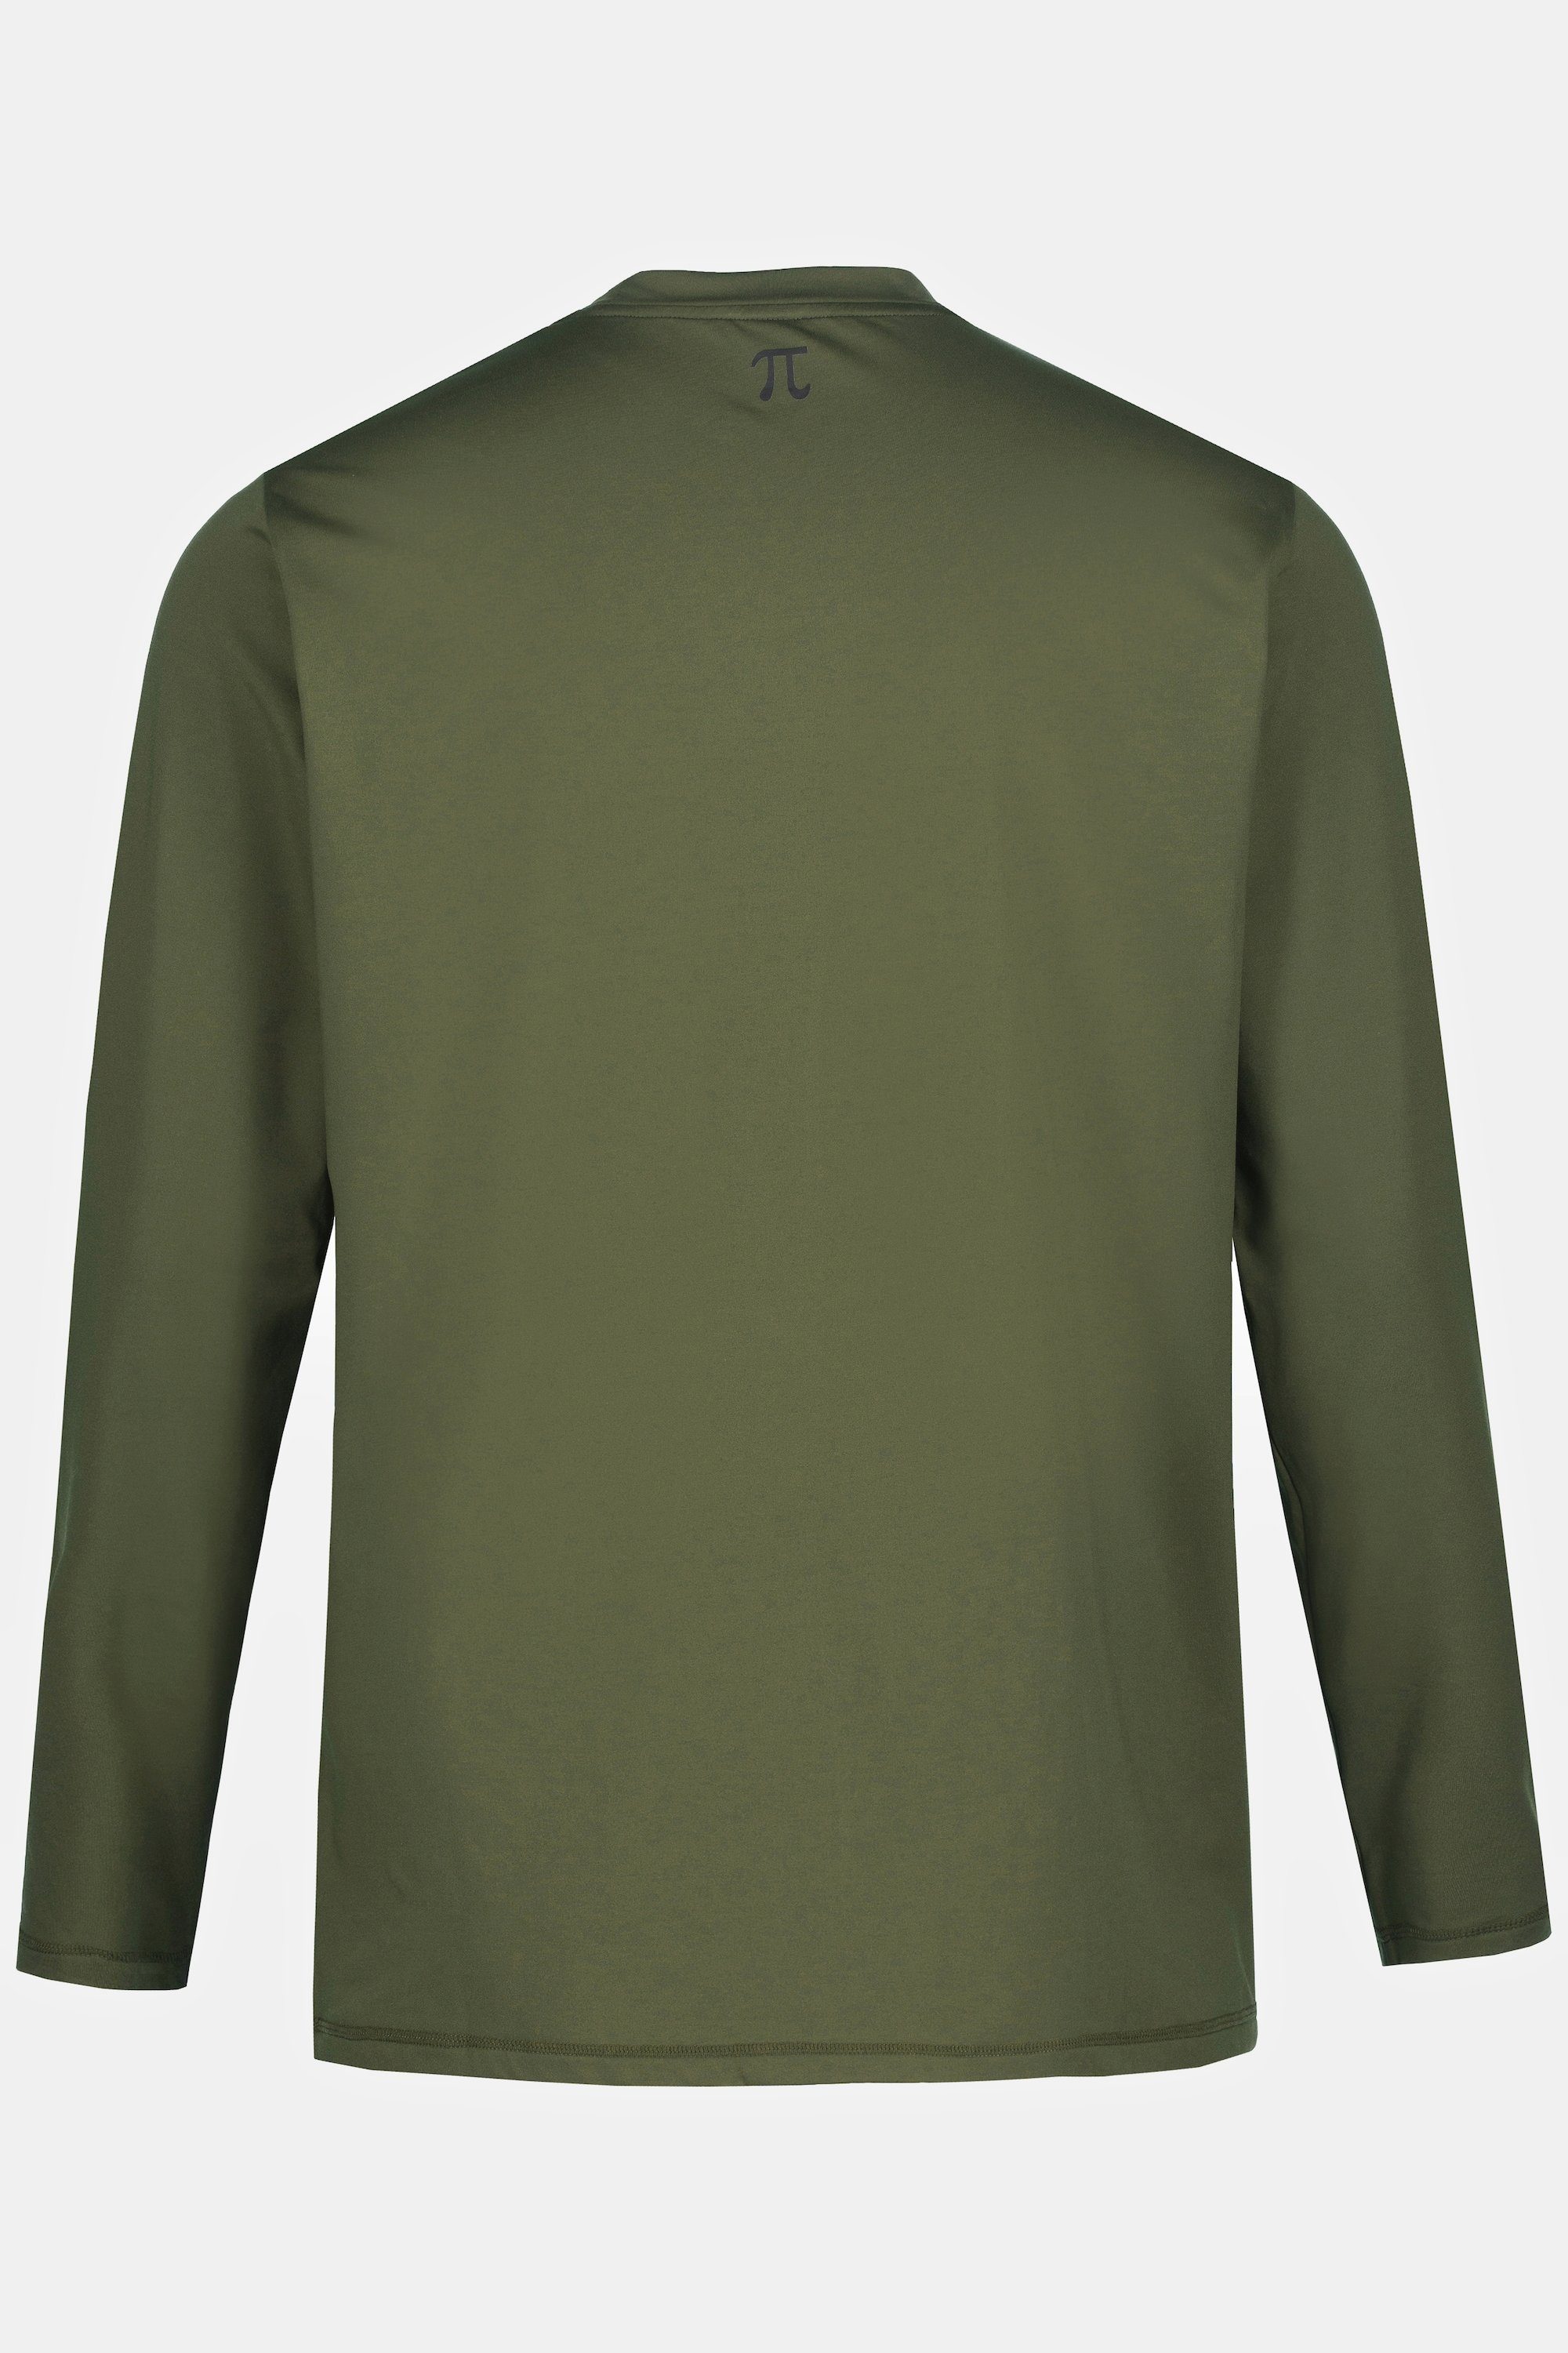 Langarm Thermo dunkel JP1880 Skiwear Funktions-Unterhemd Unterhemd khaki